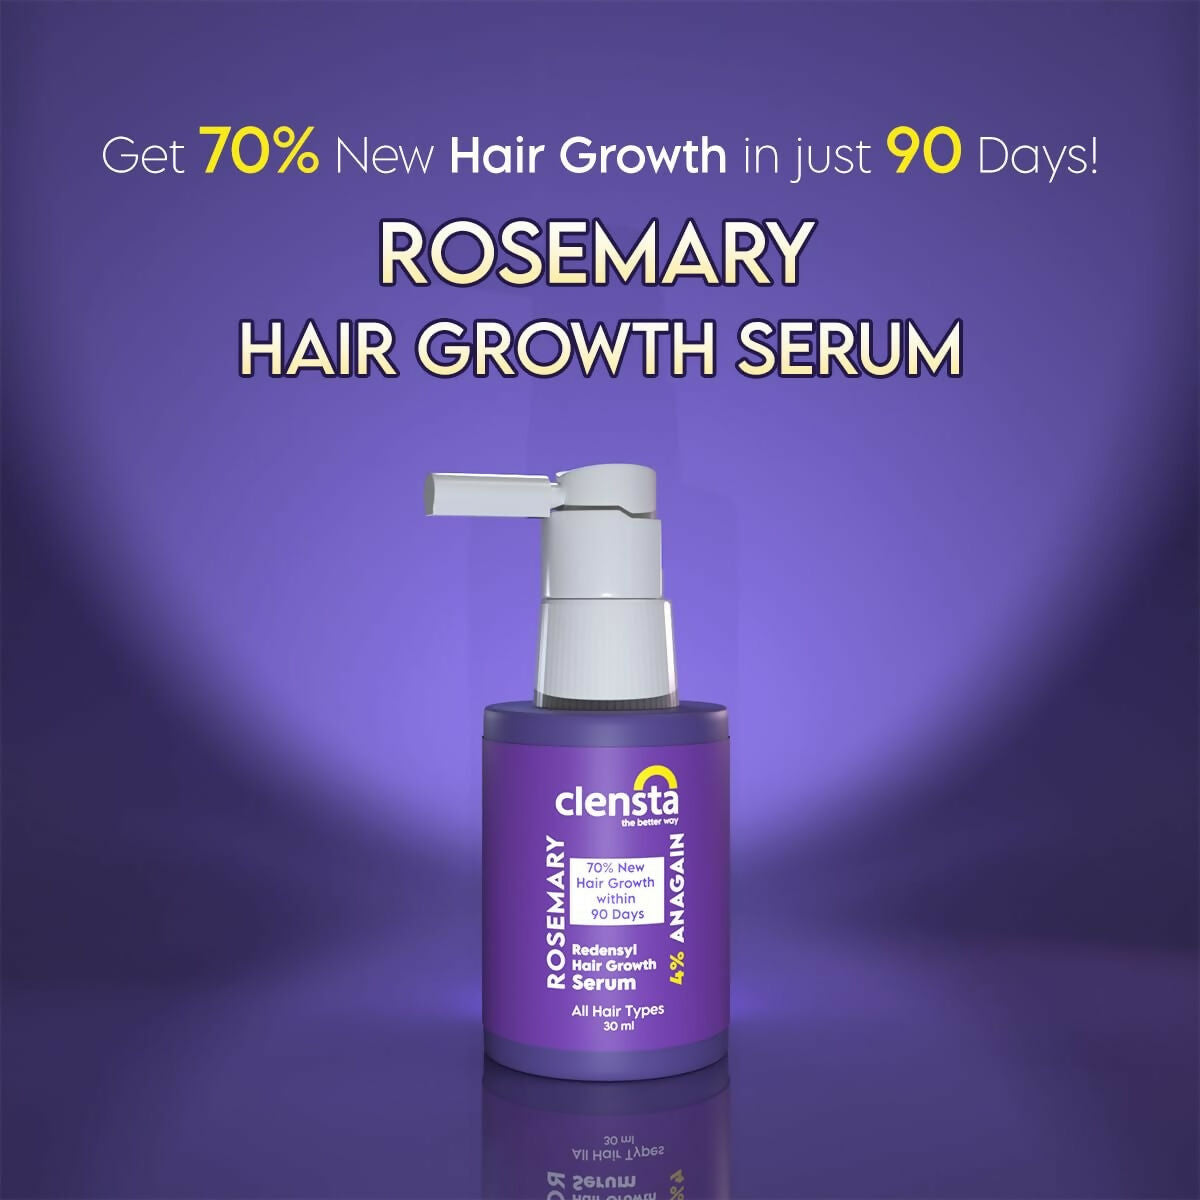 Clensta Rosemary Redensyl Hair Growth Serum